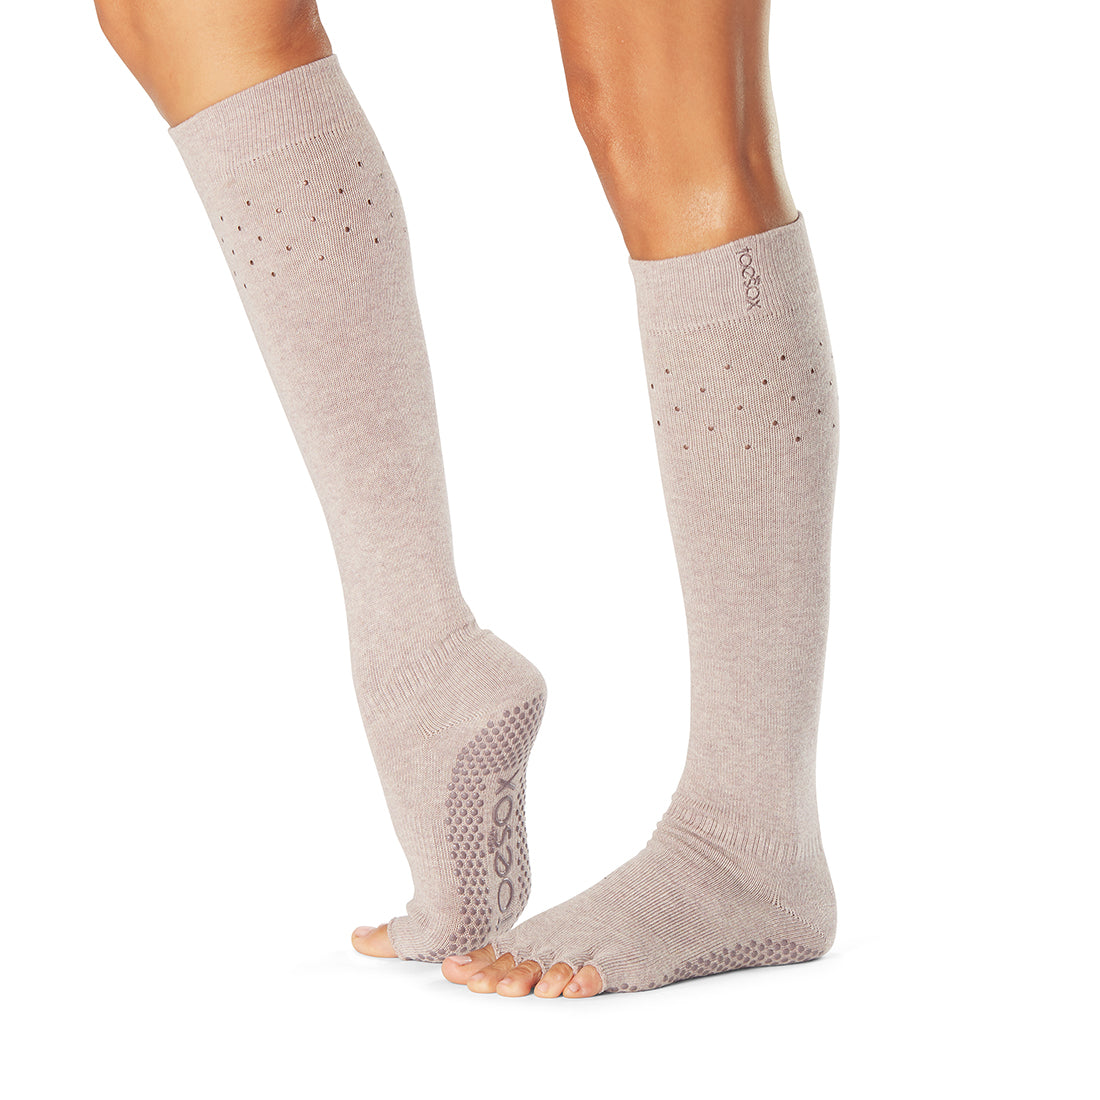 Tavi Half Toe Elle Grip Socks – The Shop at Equinox